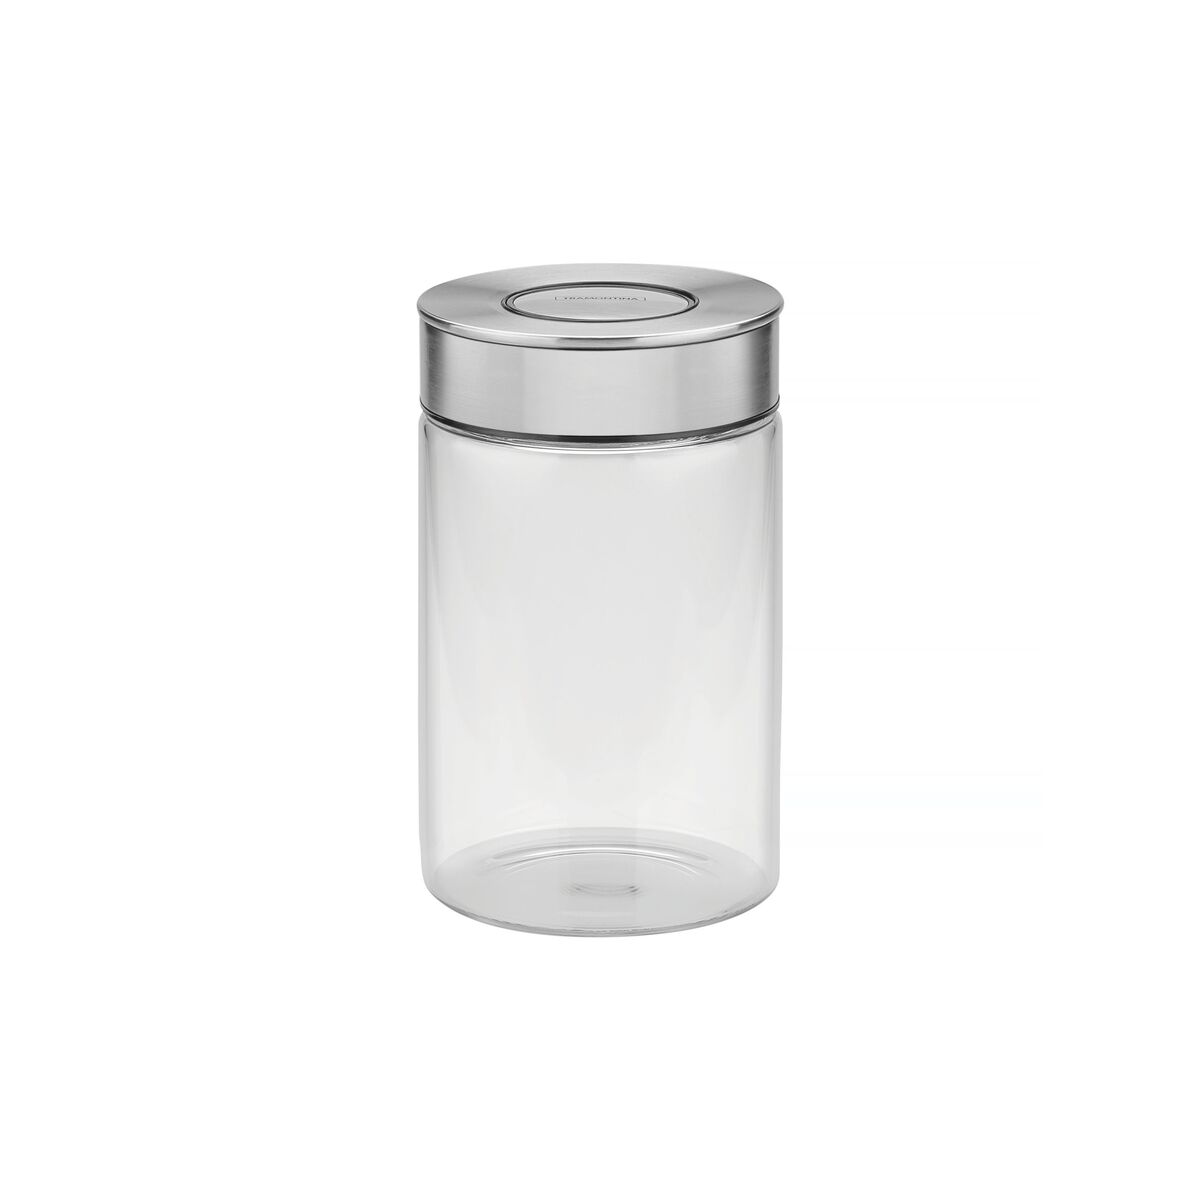 Tramontina Purezza glass jar with stainless steel lid, 1 L